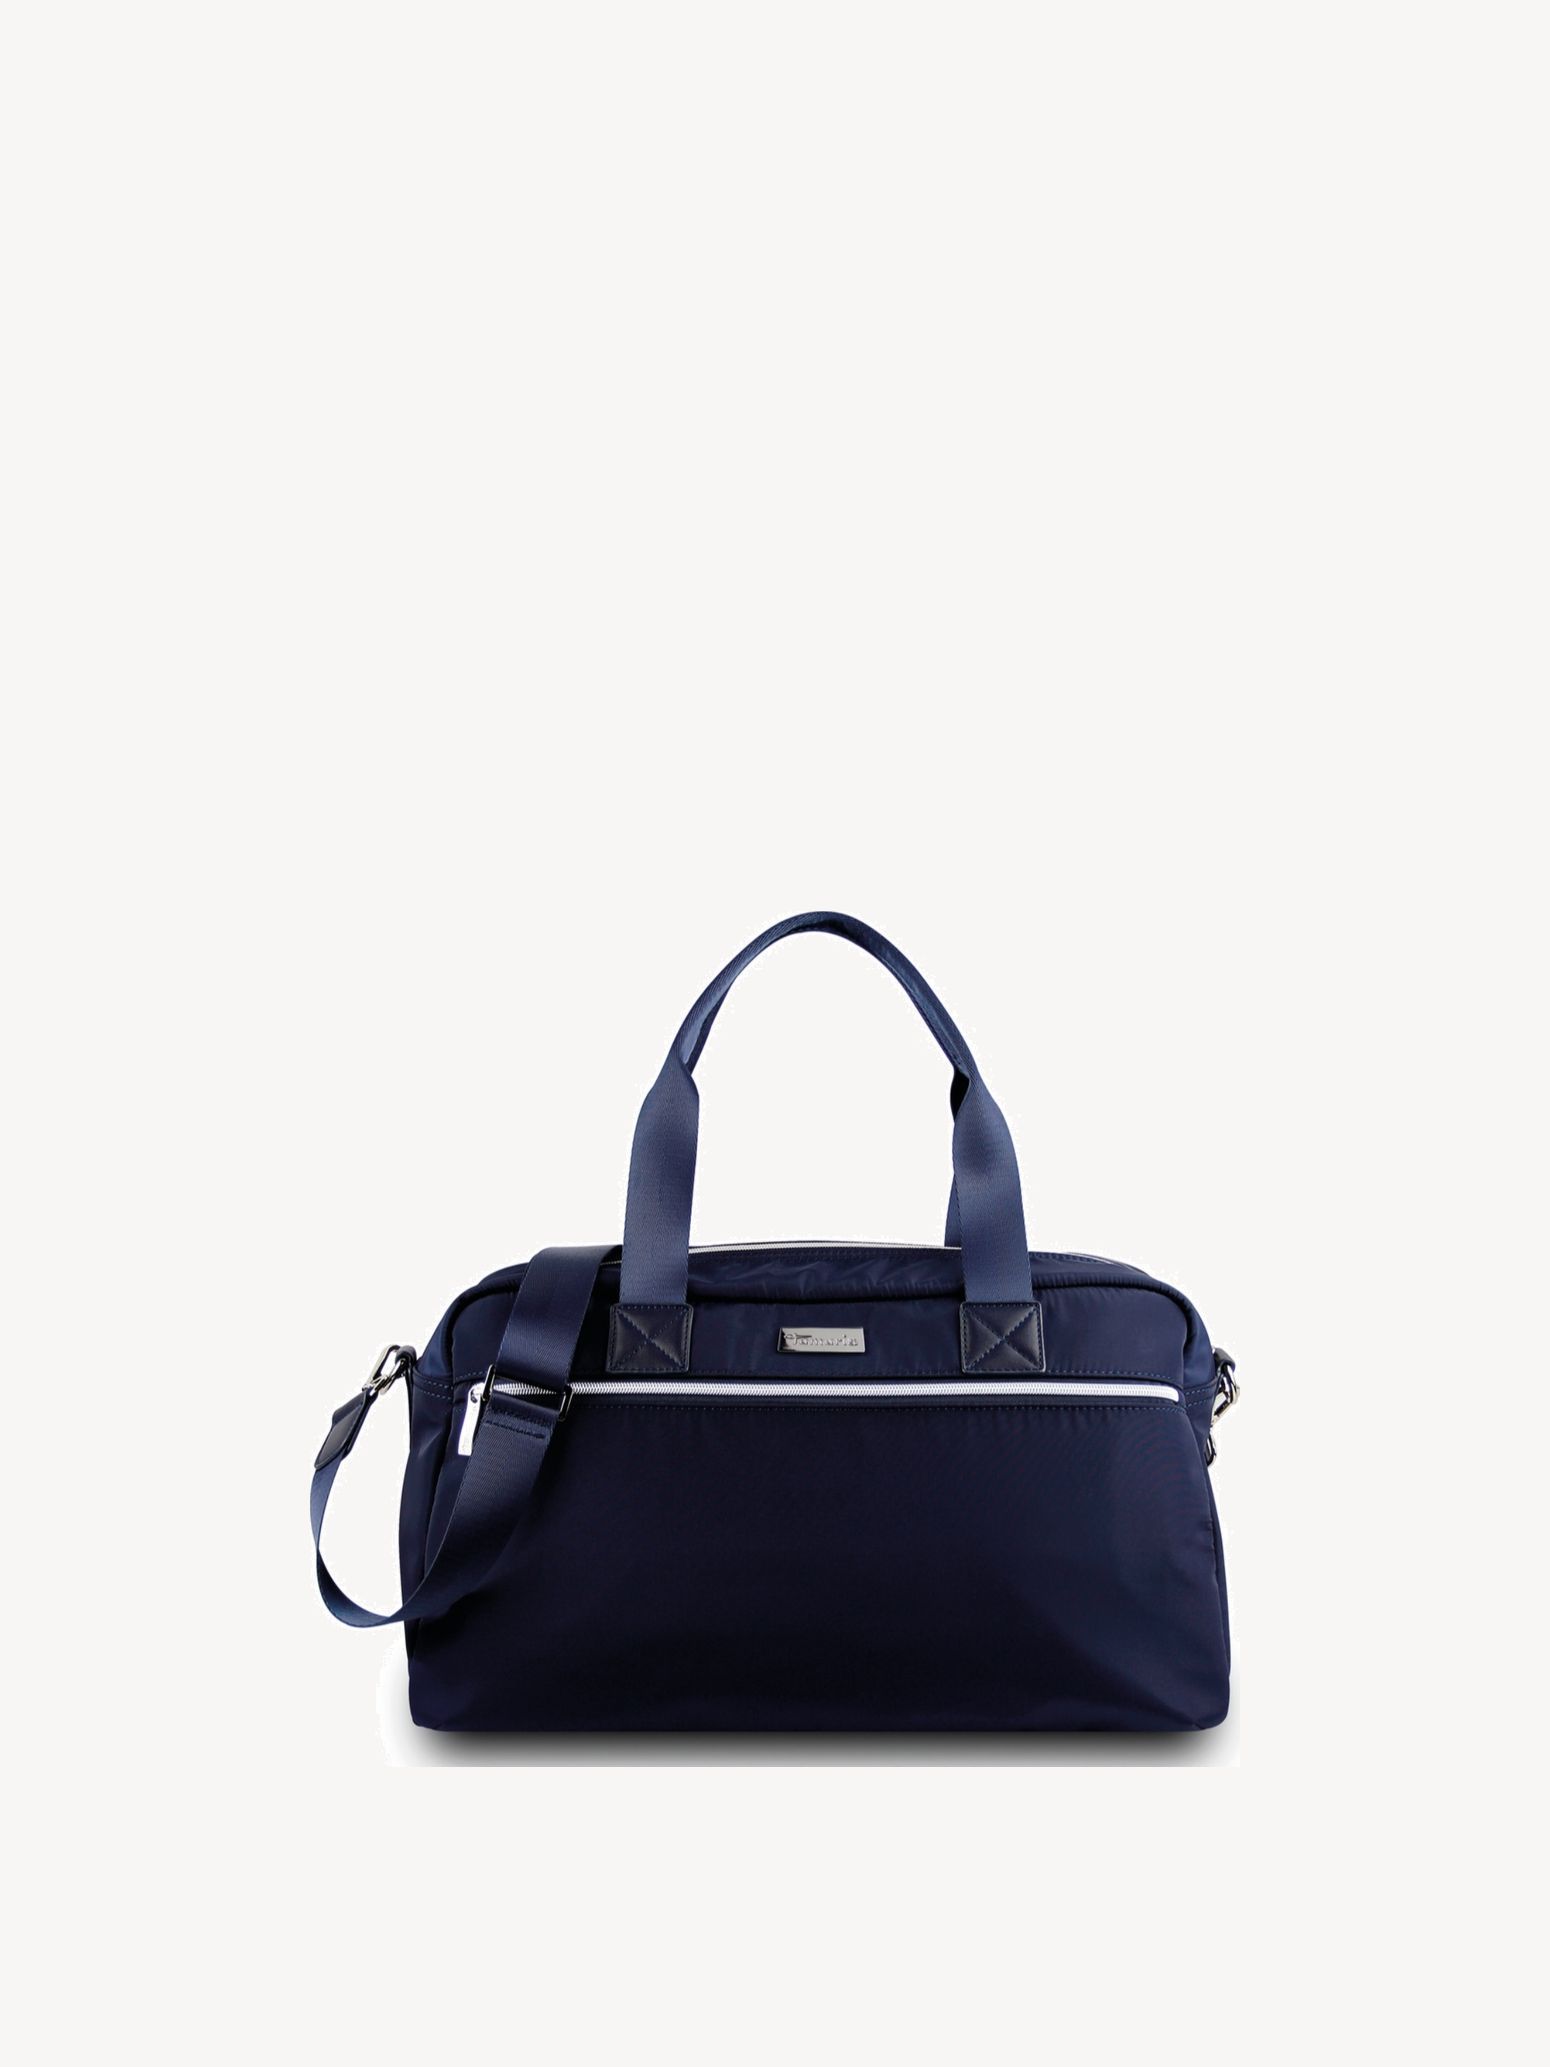 Stuepige Ampere venstre Travel bag - blue TM1607-903-1: Buy Tamaris Handbags online!